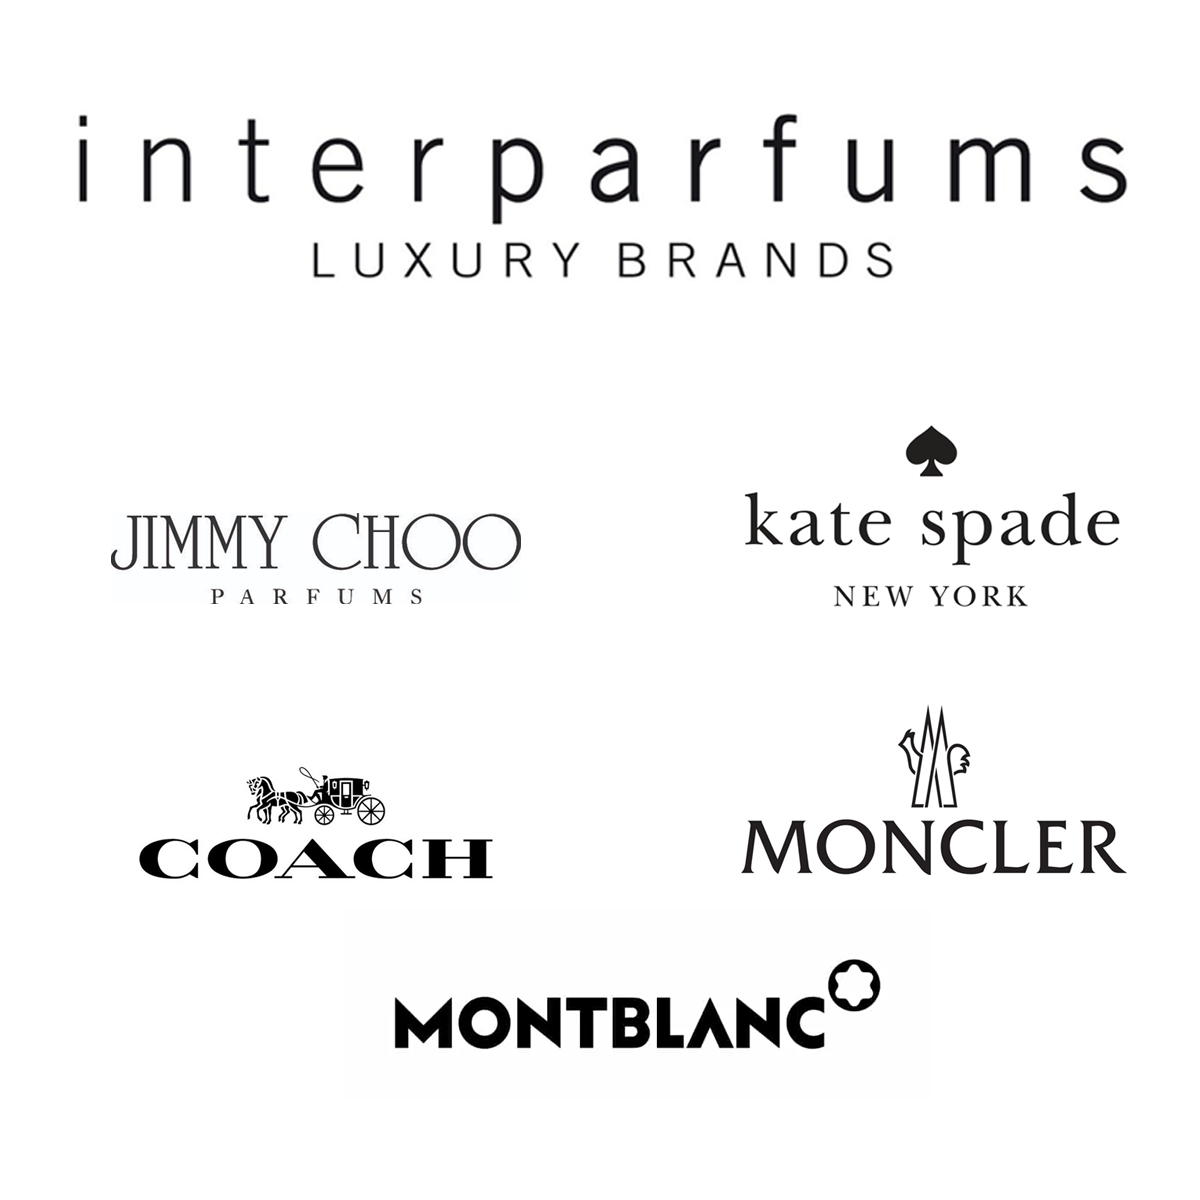 Interparfums Luxury Brands - Oui Do Good - Mourad Zeggari Digital ...